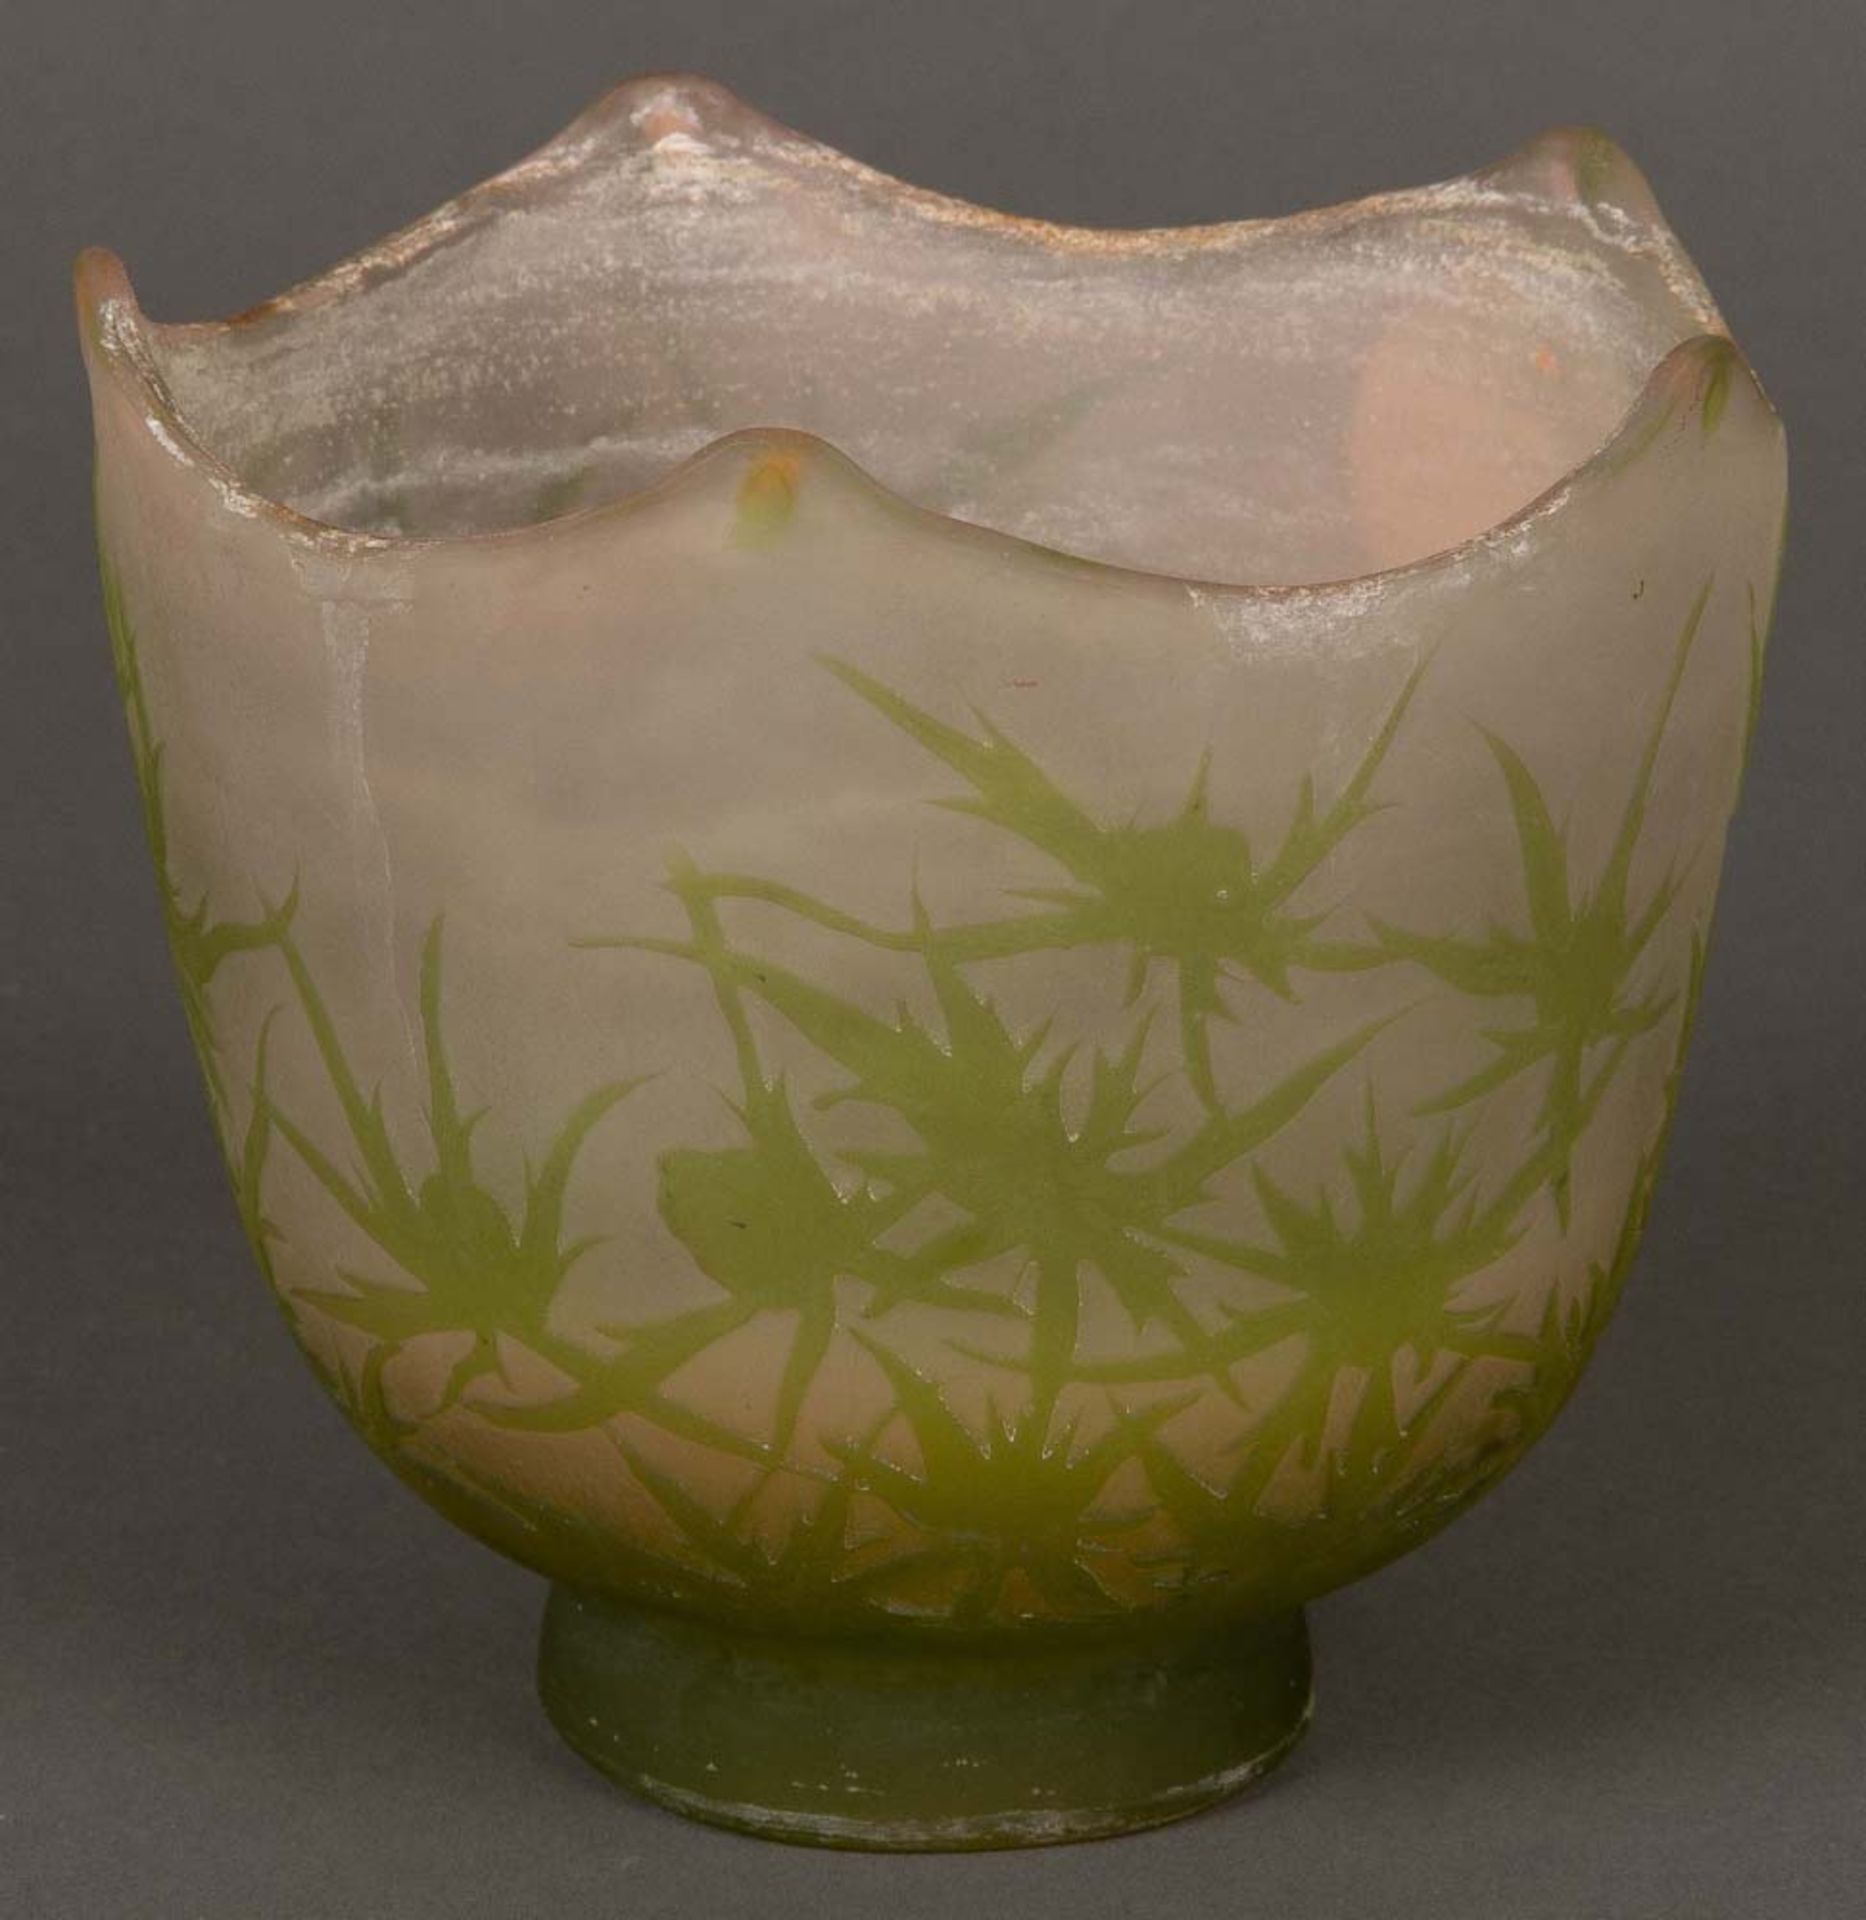 Jugendstil-Vase. Nancy, Émile Gallé 1900-1905. Farbloses Glas, farbig überfangen, geätzt und